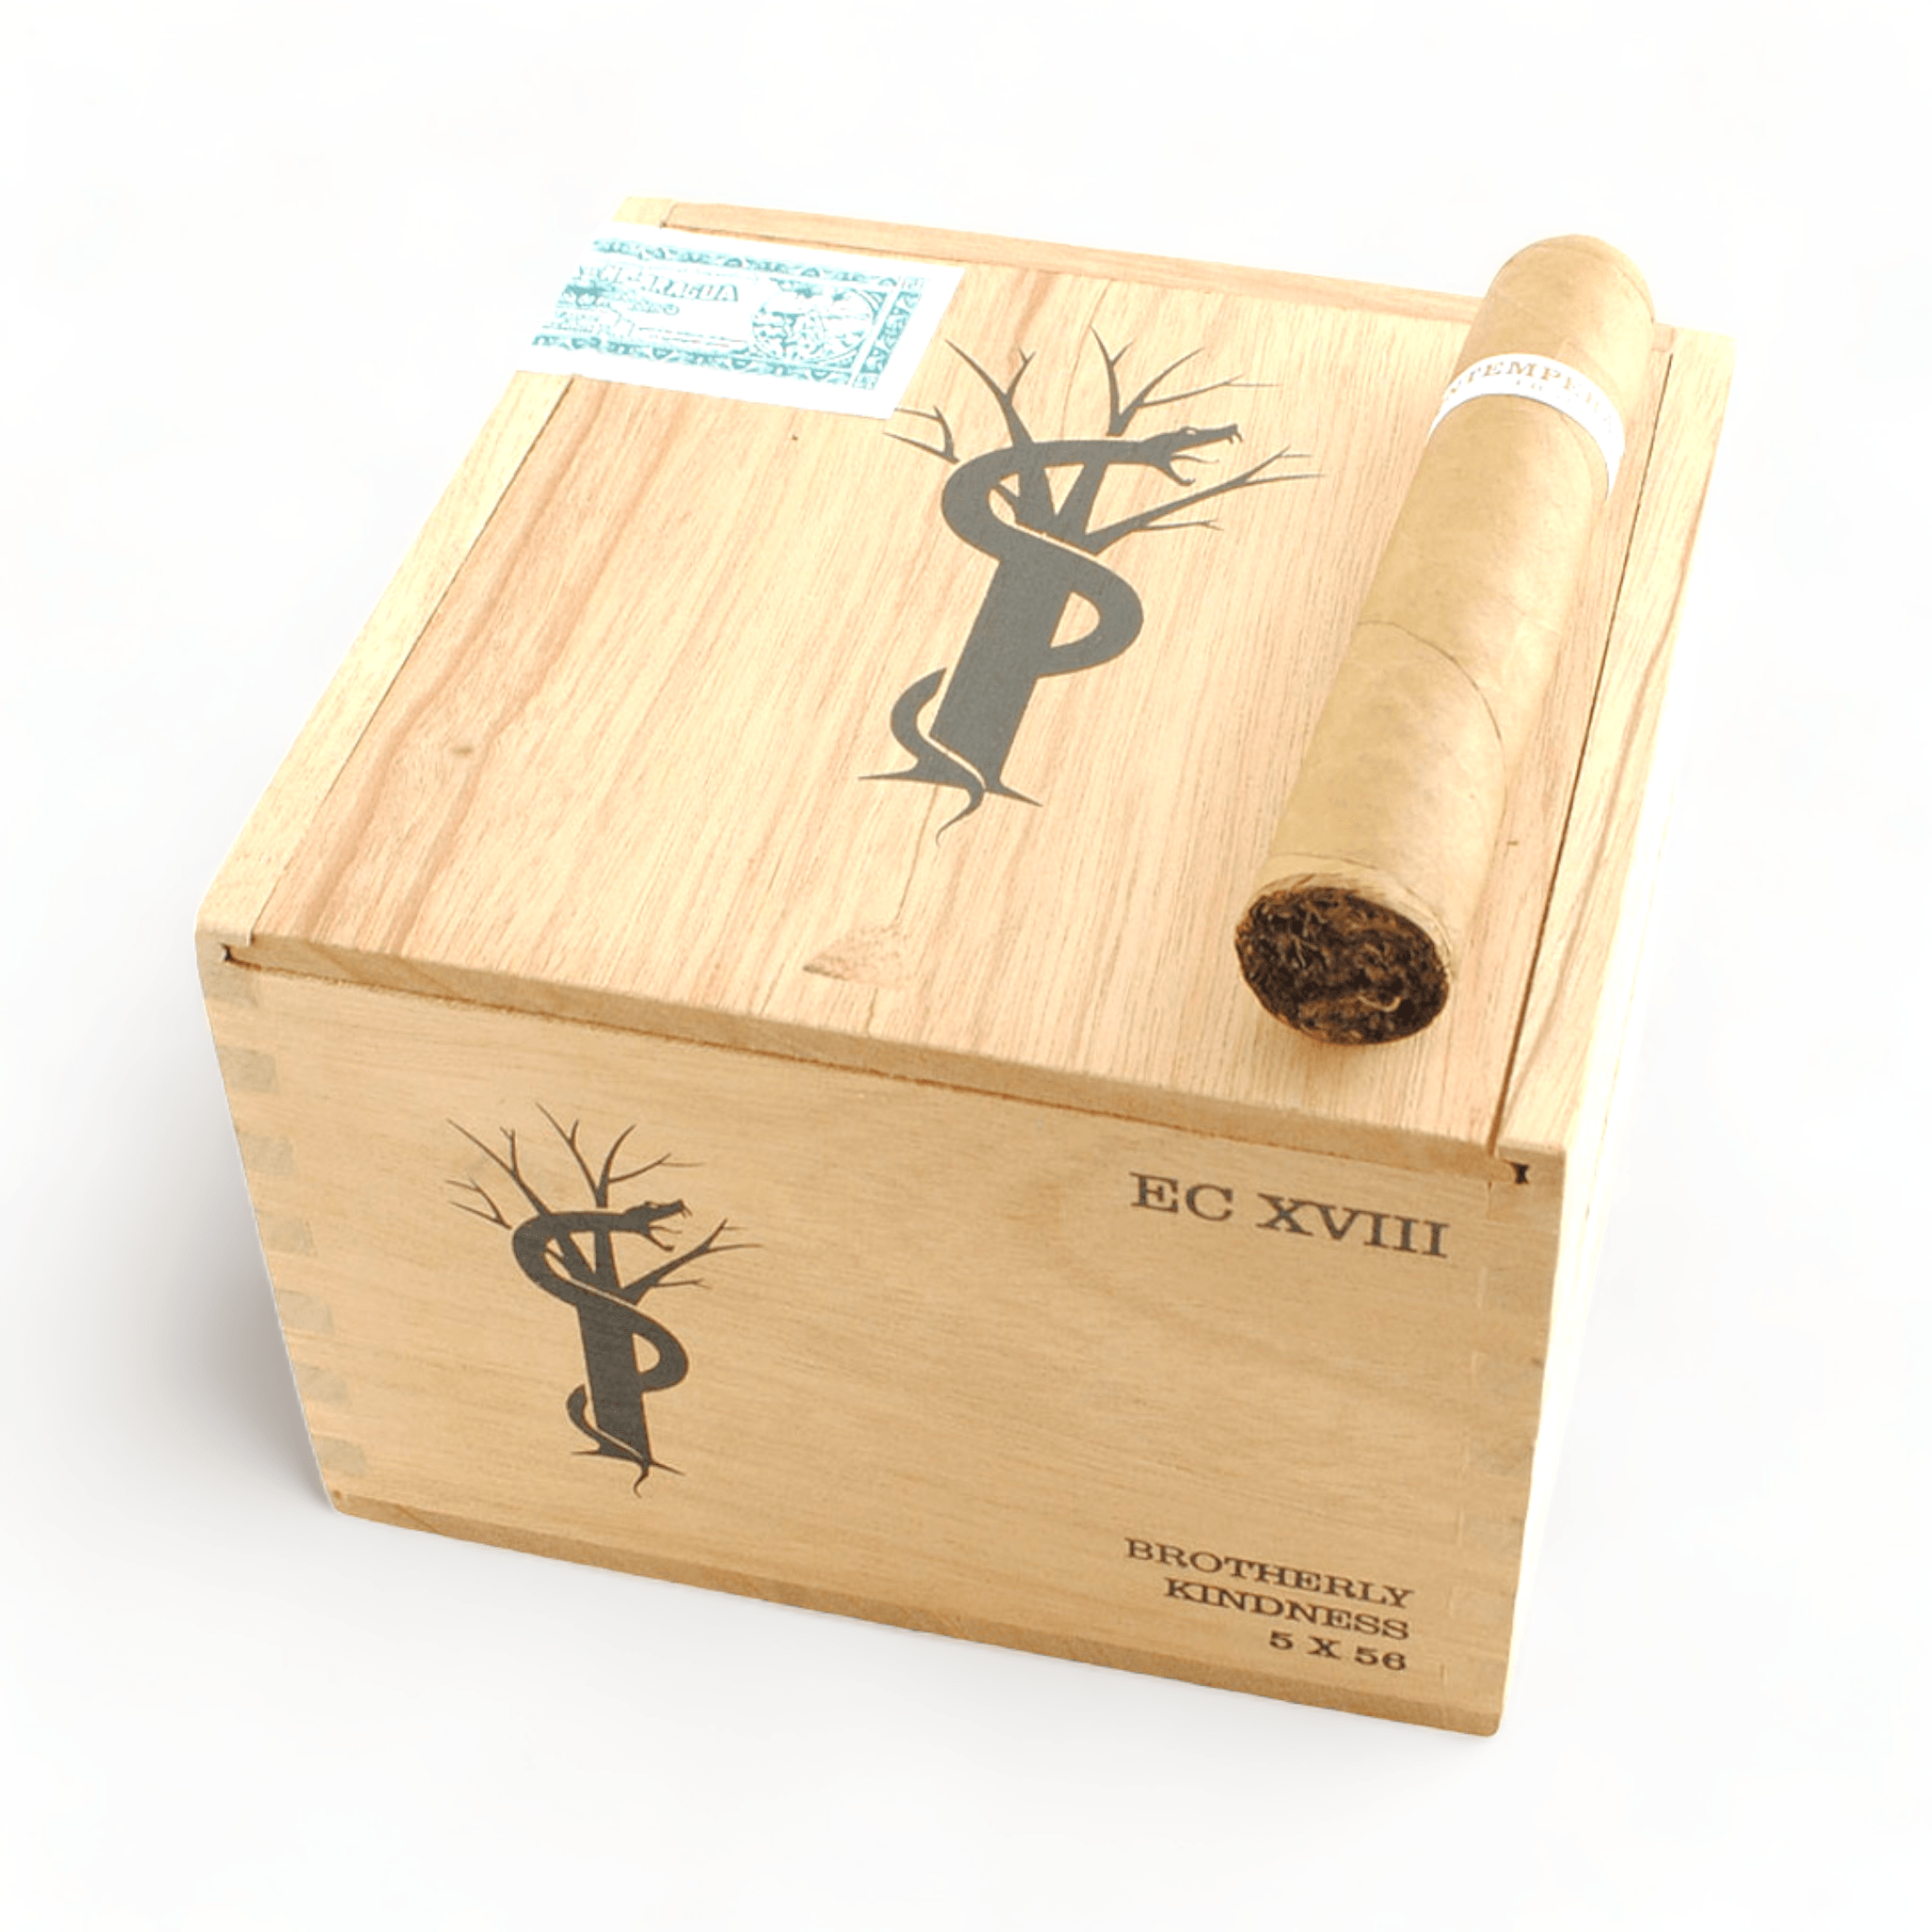 Roma Craft Cigars | Intemperance Ec Xviii Brotherly Kindness 5x56 | Box of 24 - hk.cohcigars